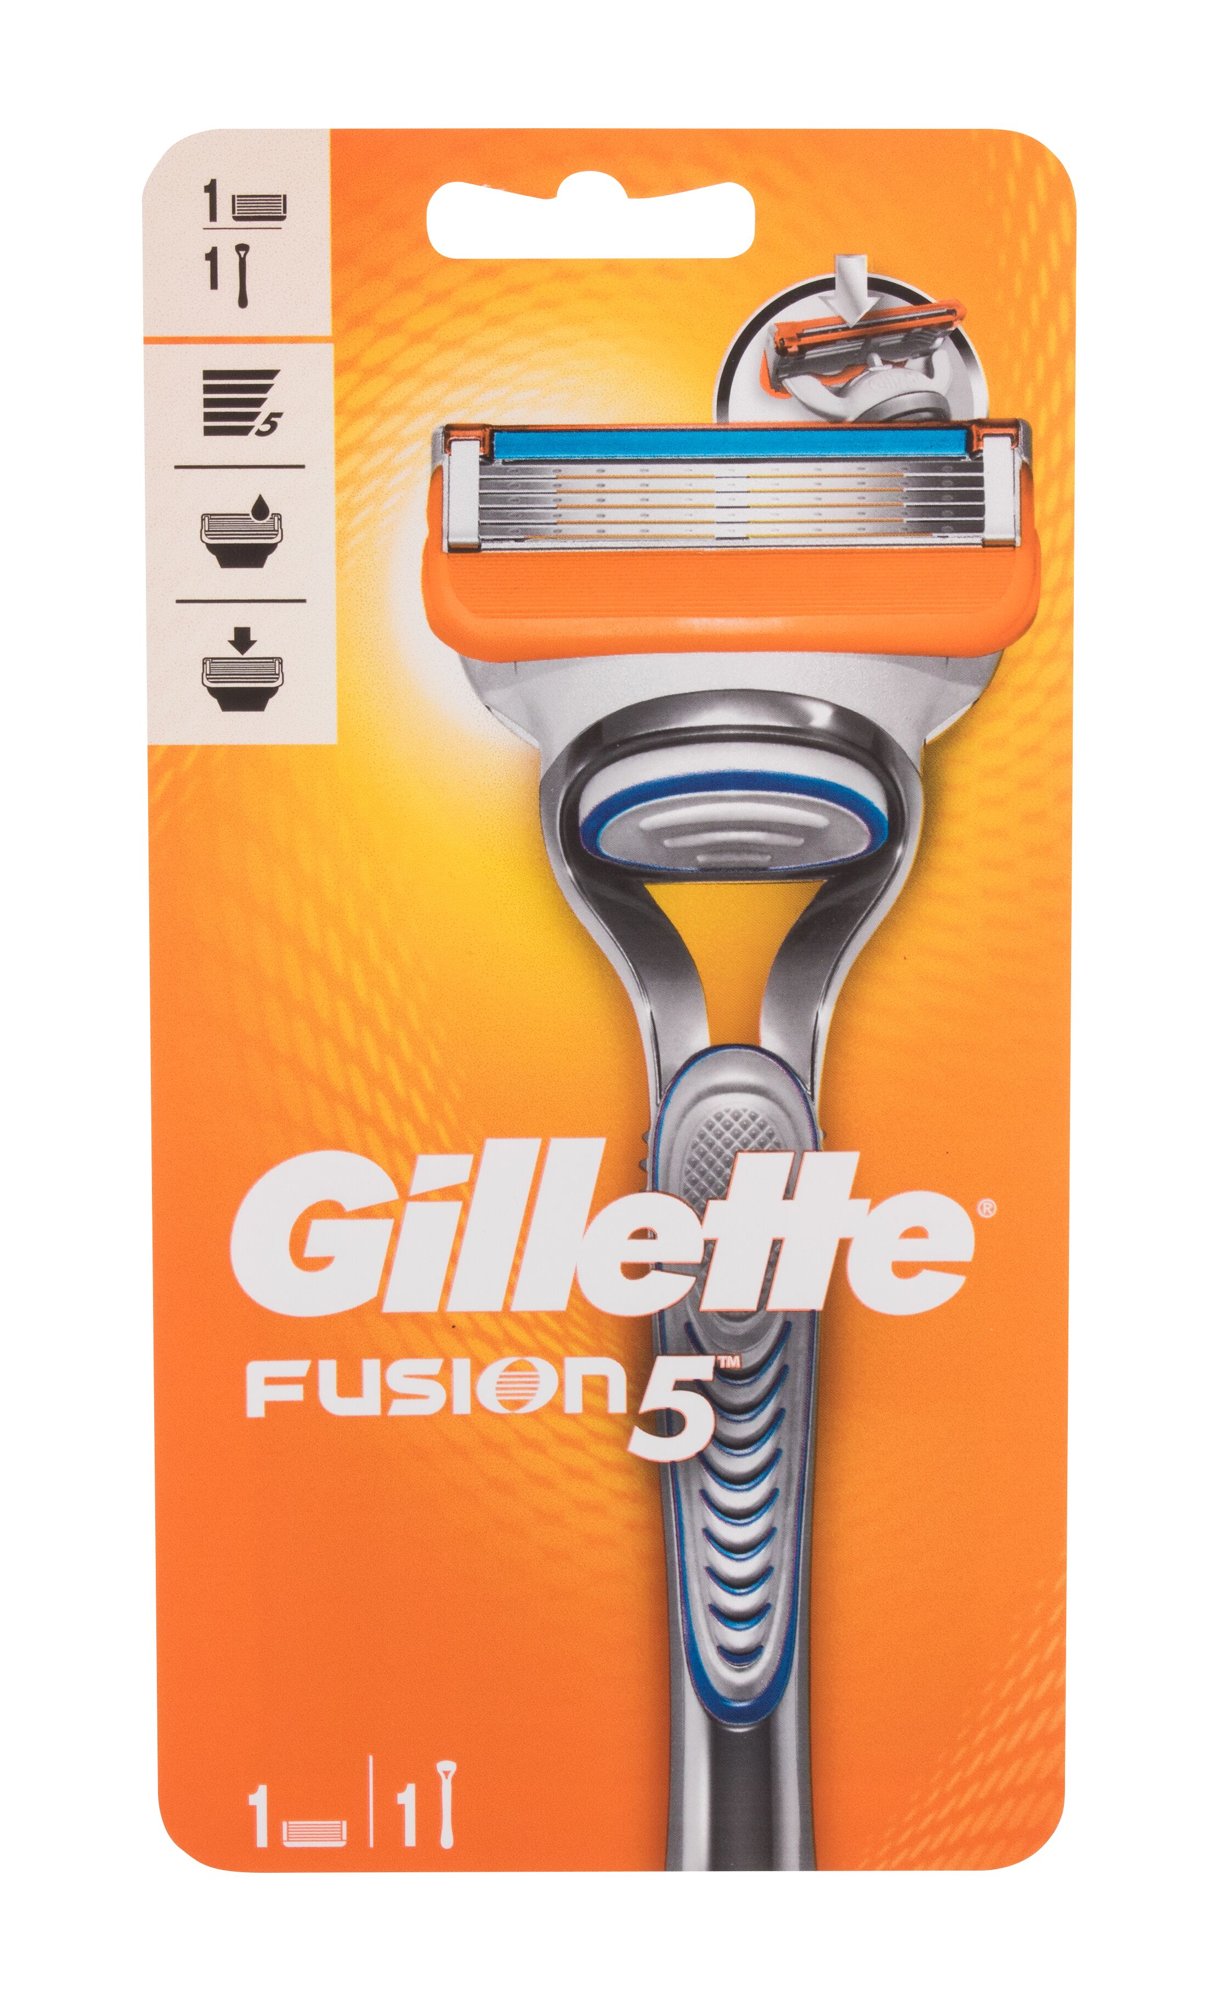 Gillette Fusion 5 skustuvas